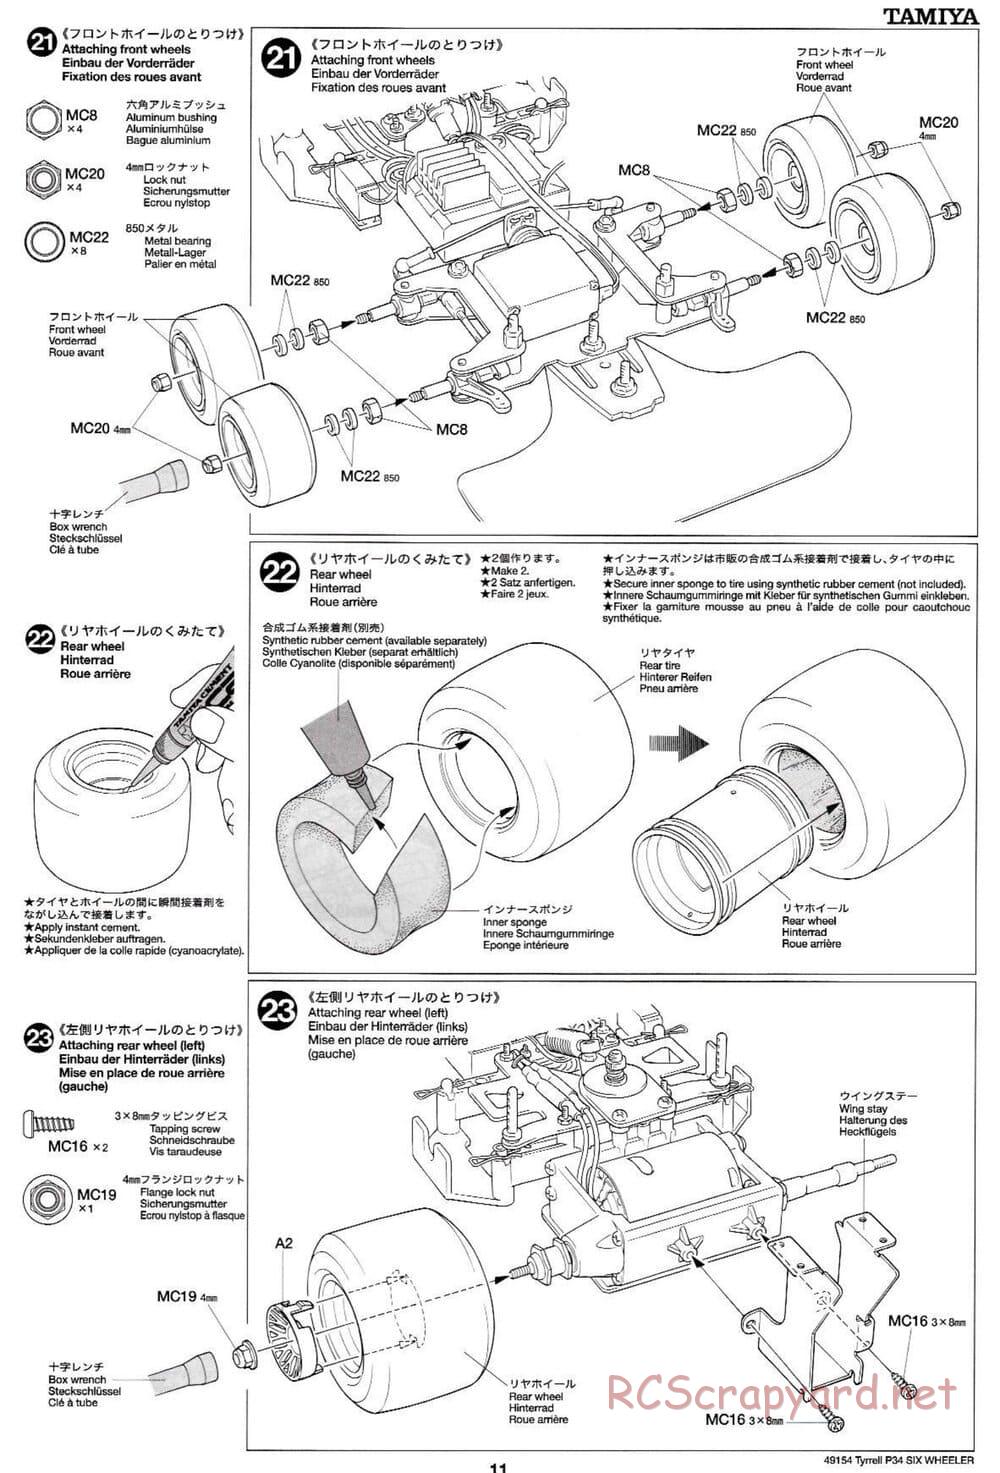 Tamiya - Tyrrell P34 Six Wheeler - F103-6W Chassis - Manual - Page 11